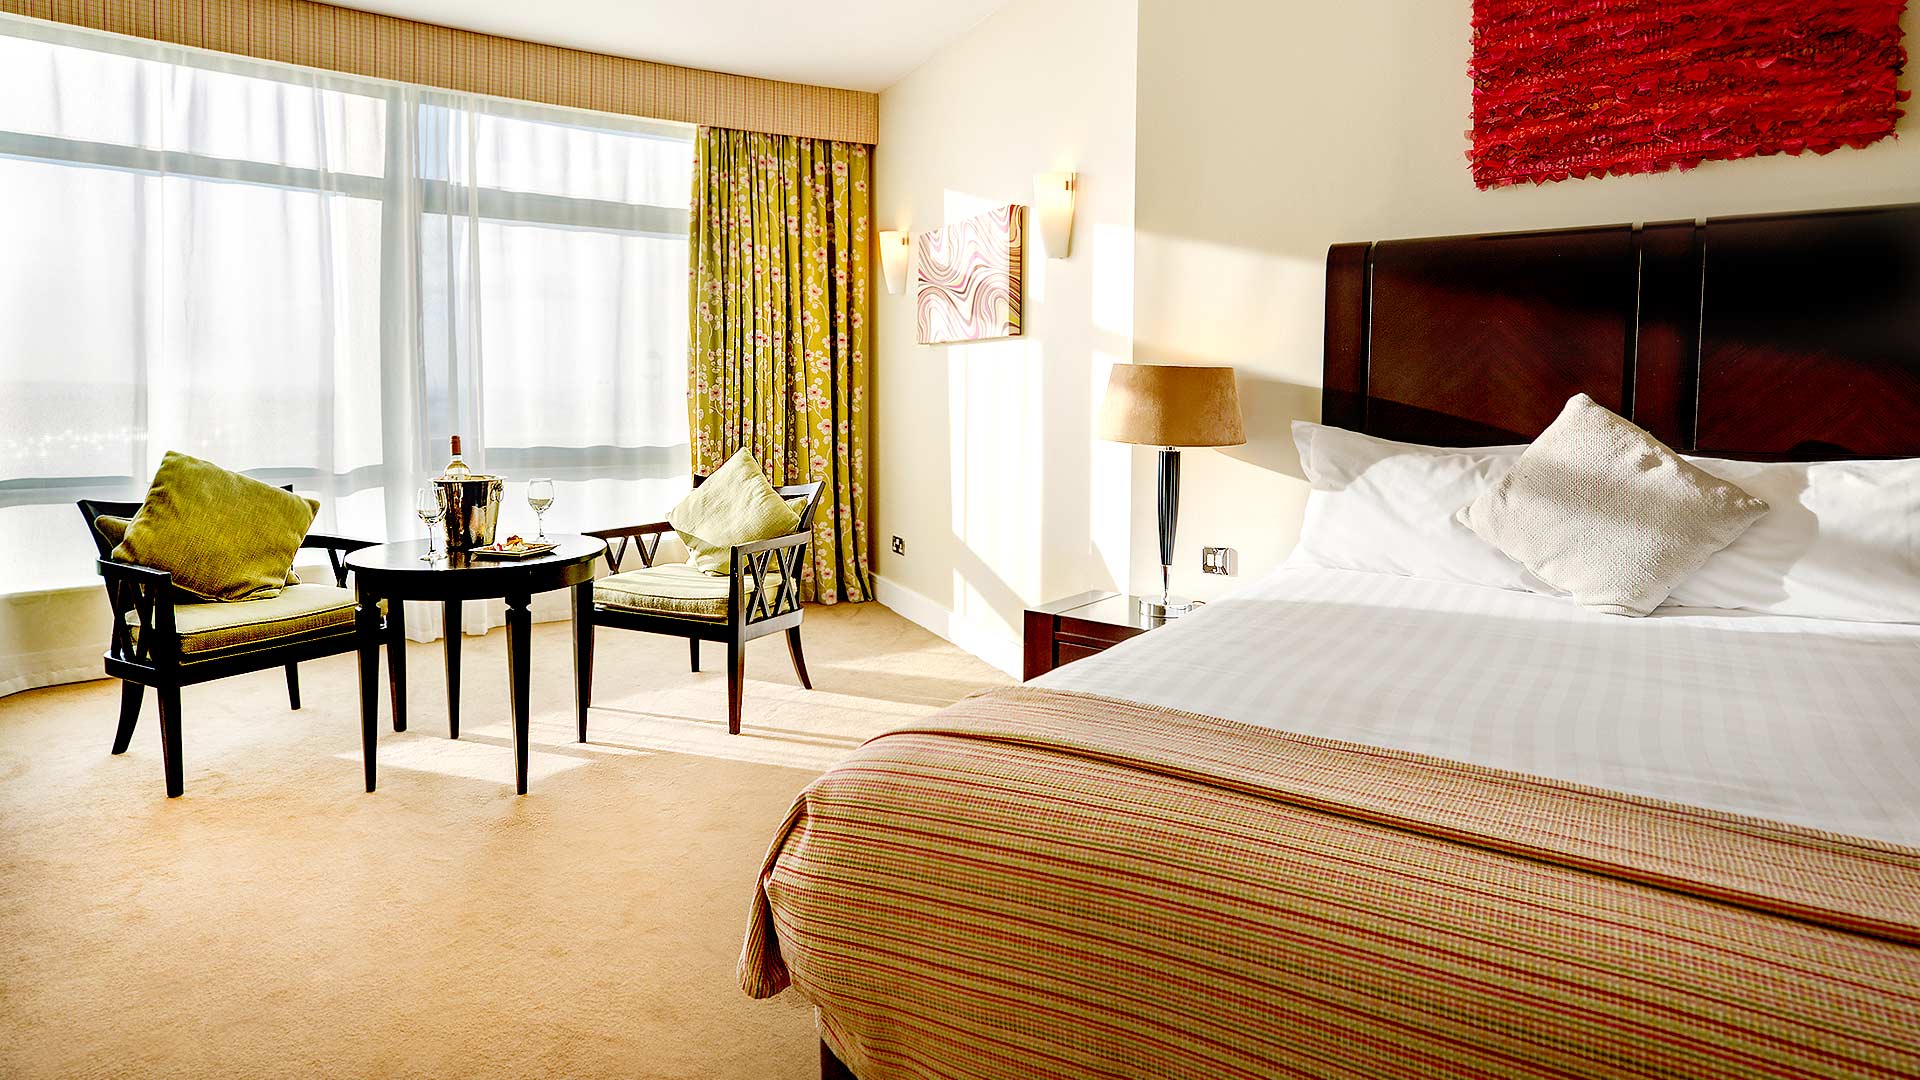 4 Star bedroom at the Cork International Hotel